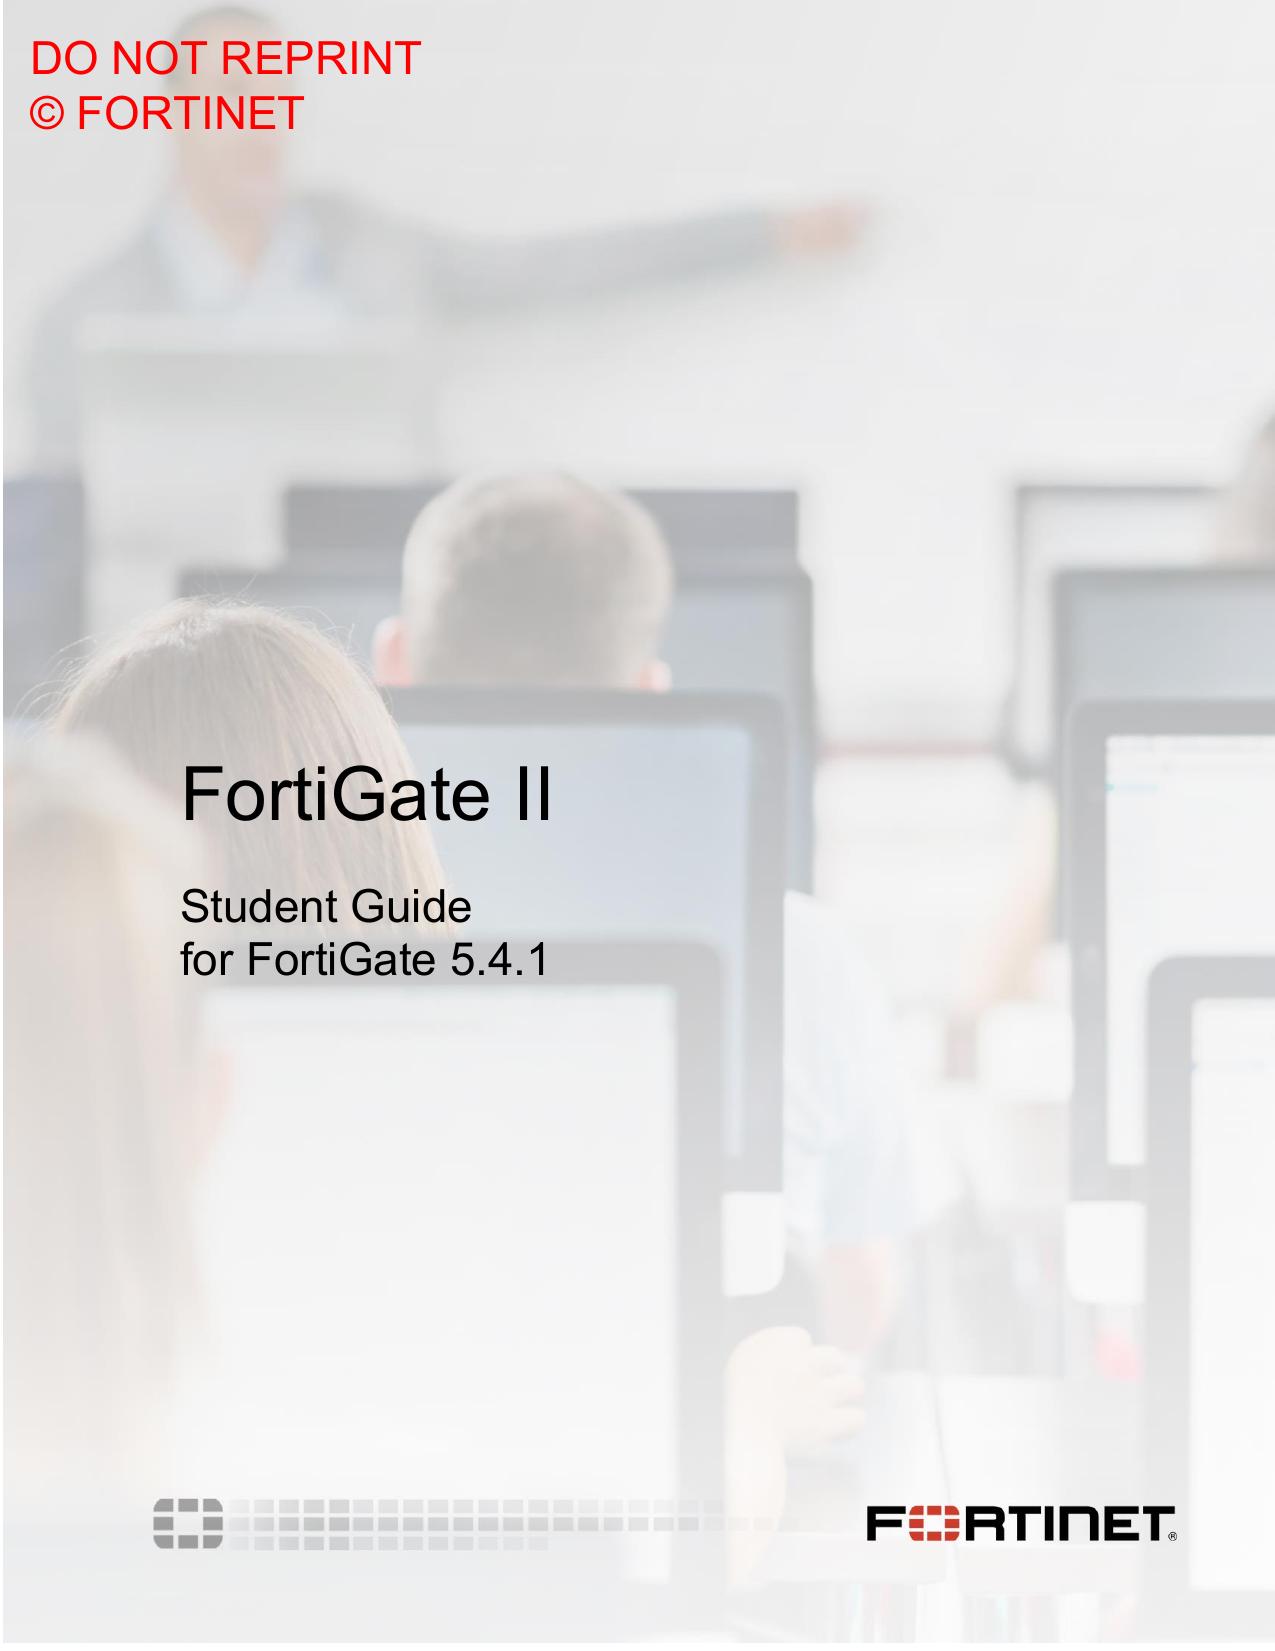 FortiGate II Student Guide